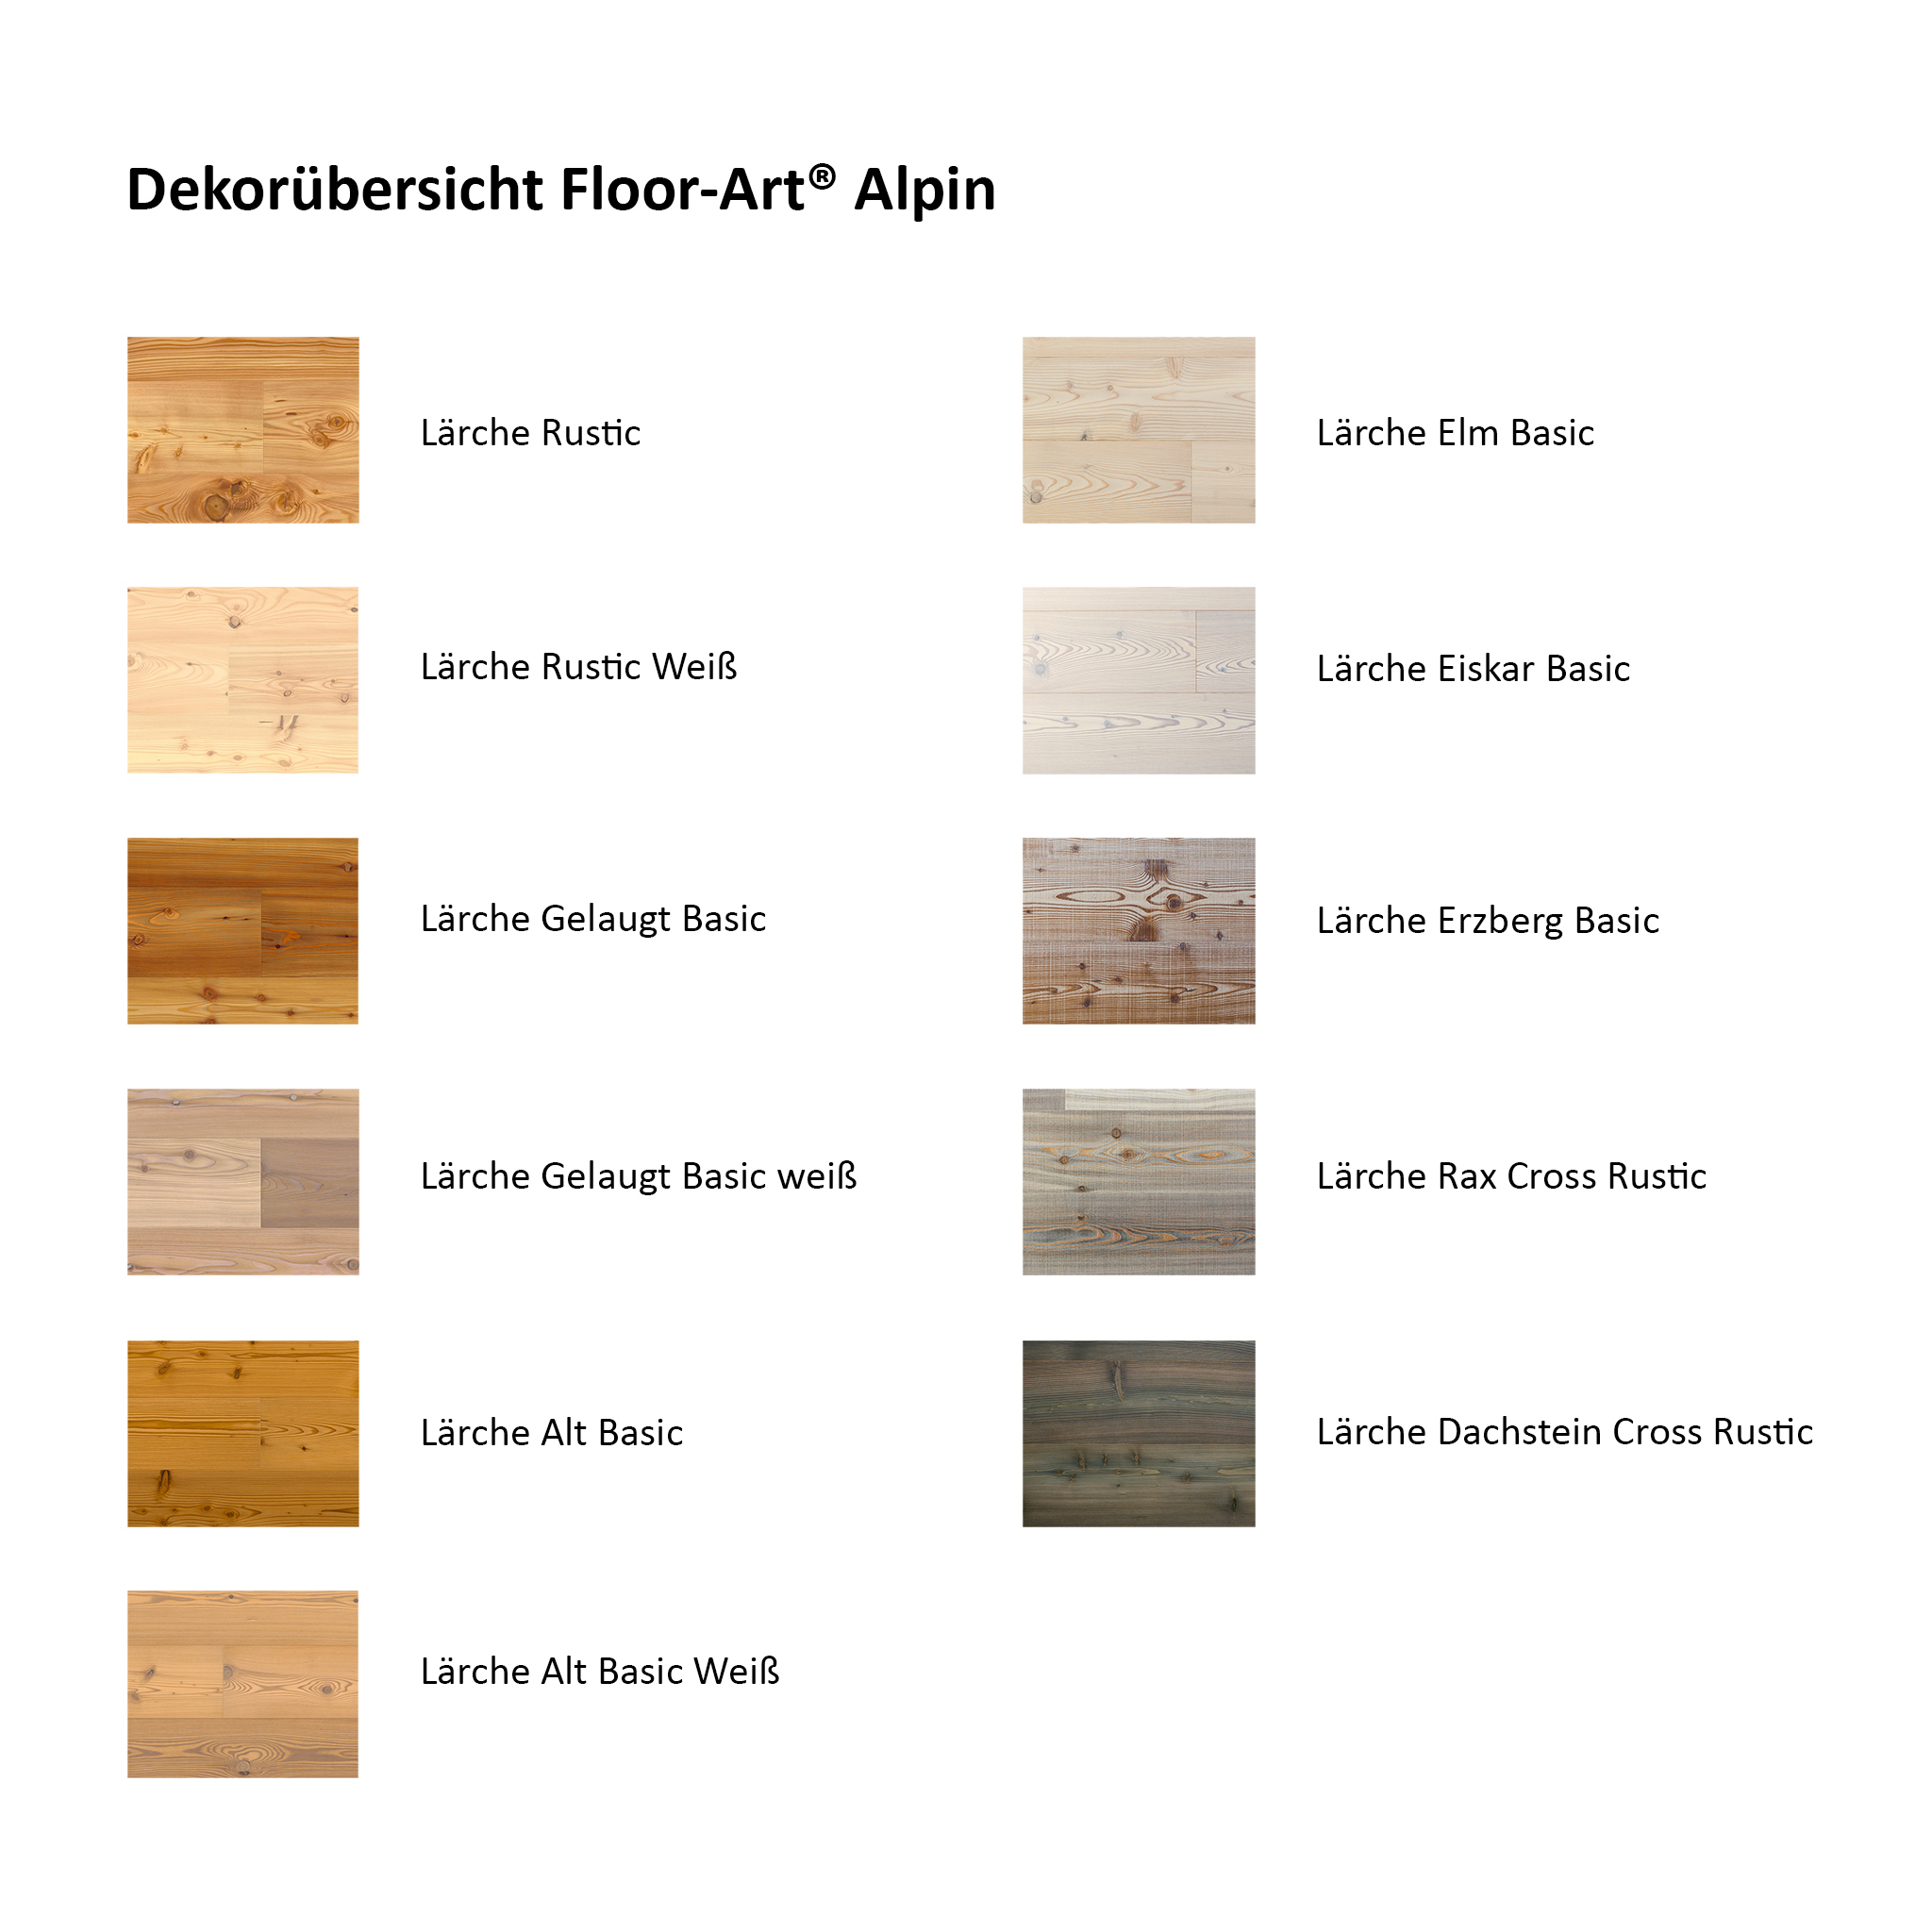 Floor-Art Alpin larch old Basic oiled